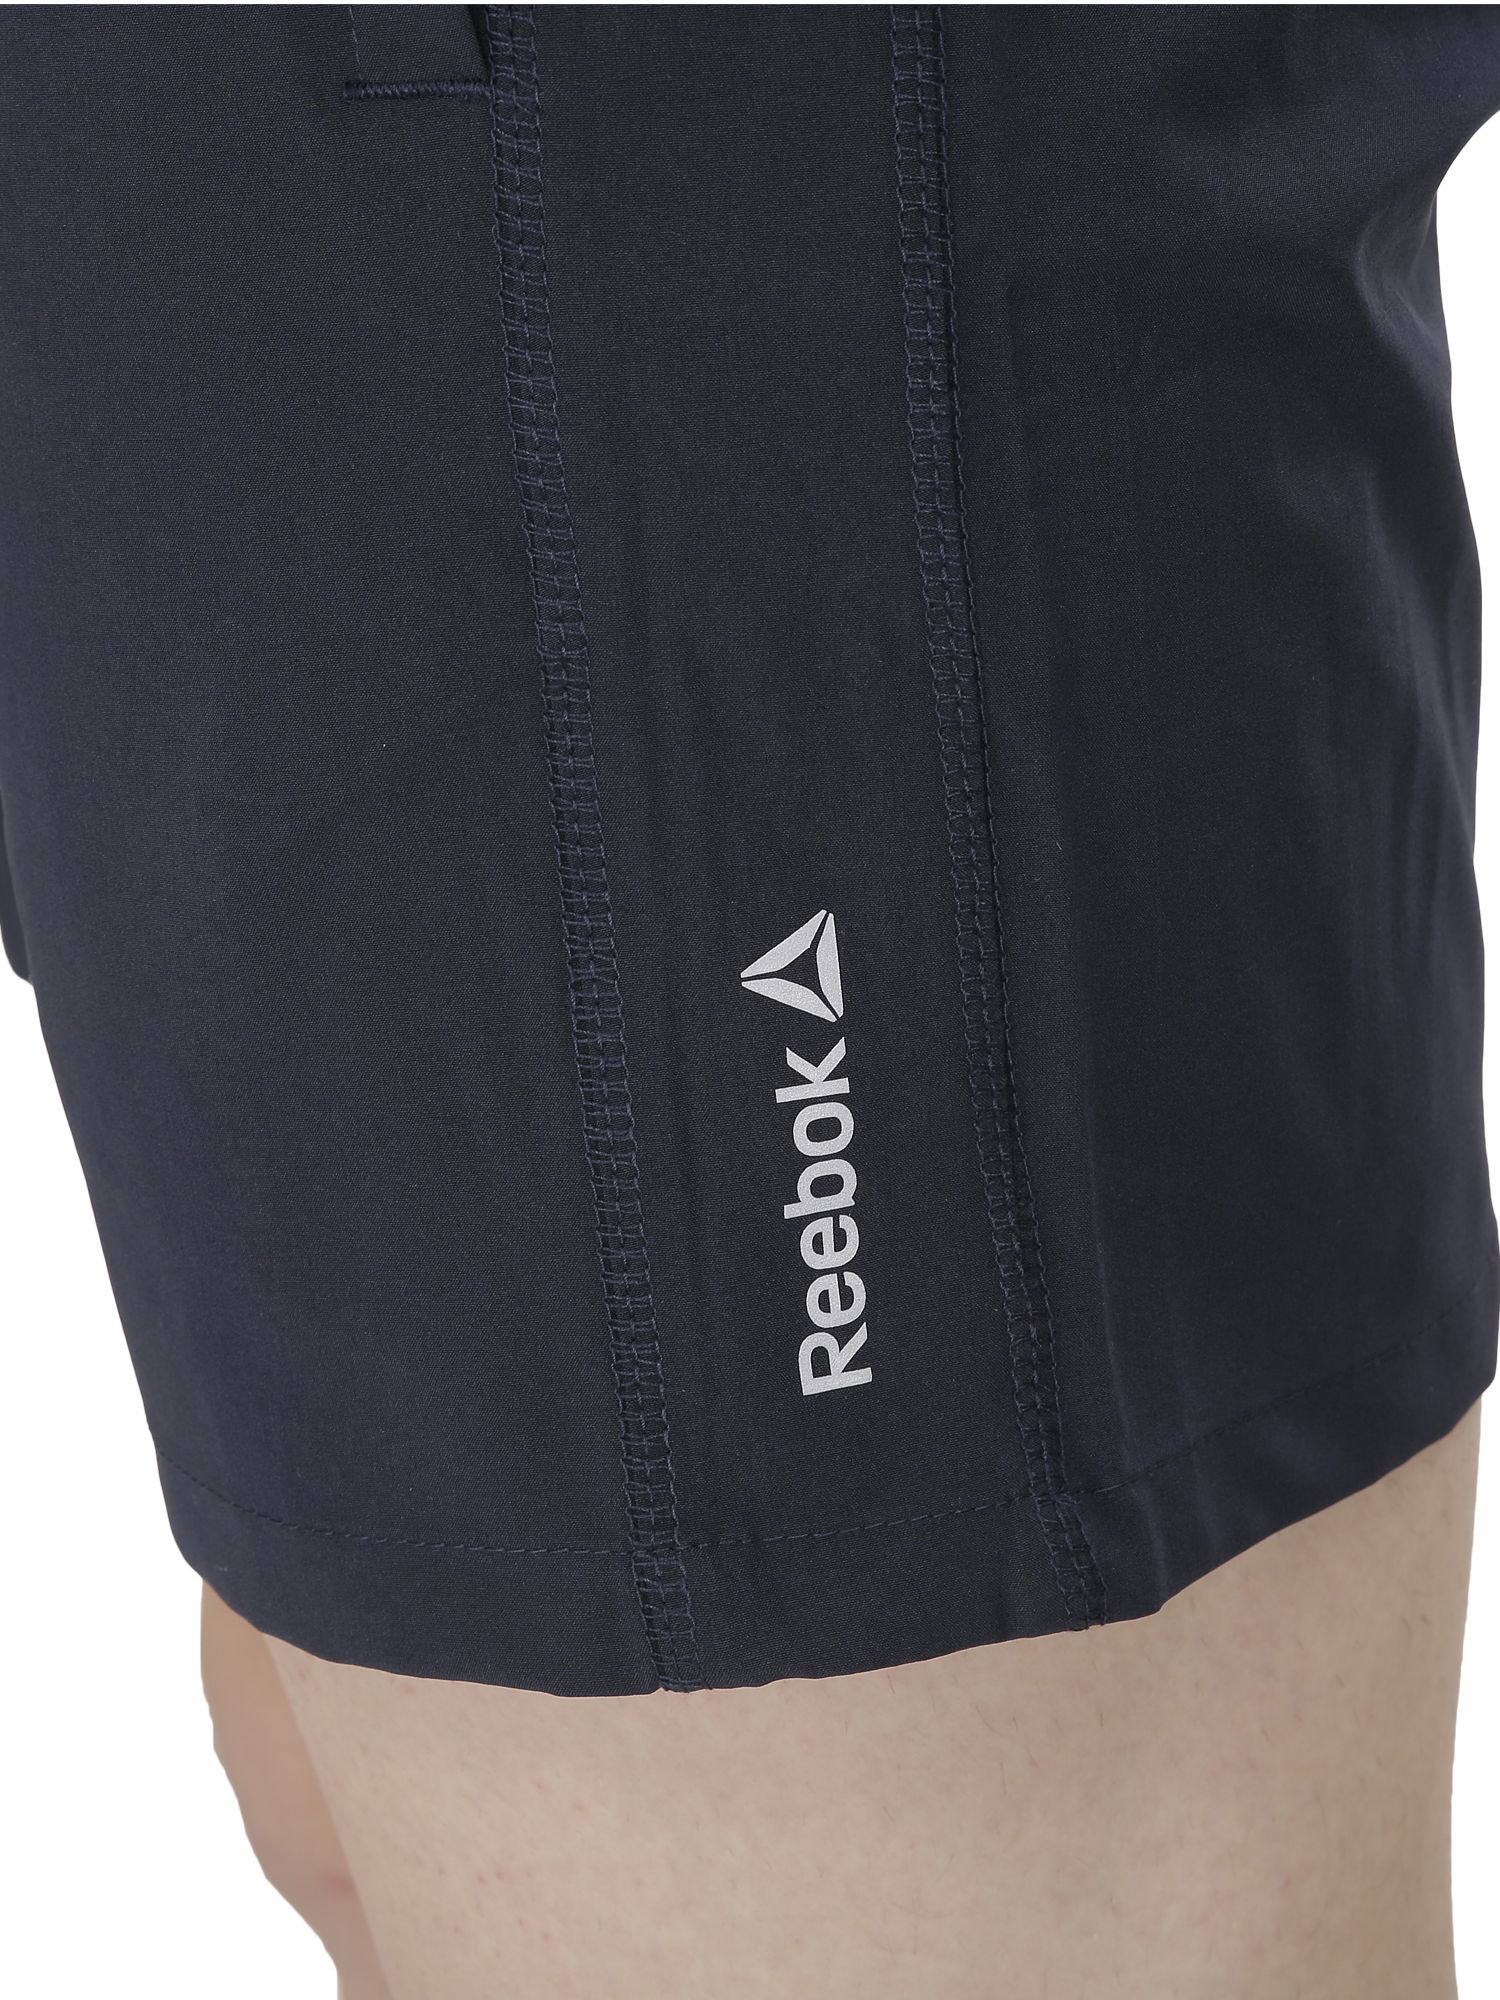 Reebok Navy Polyester Lycra Running Shorts - Buy Reebok Navy Polyester ...